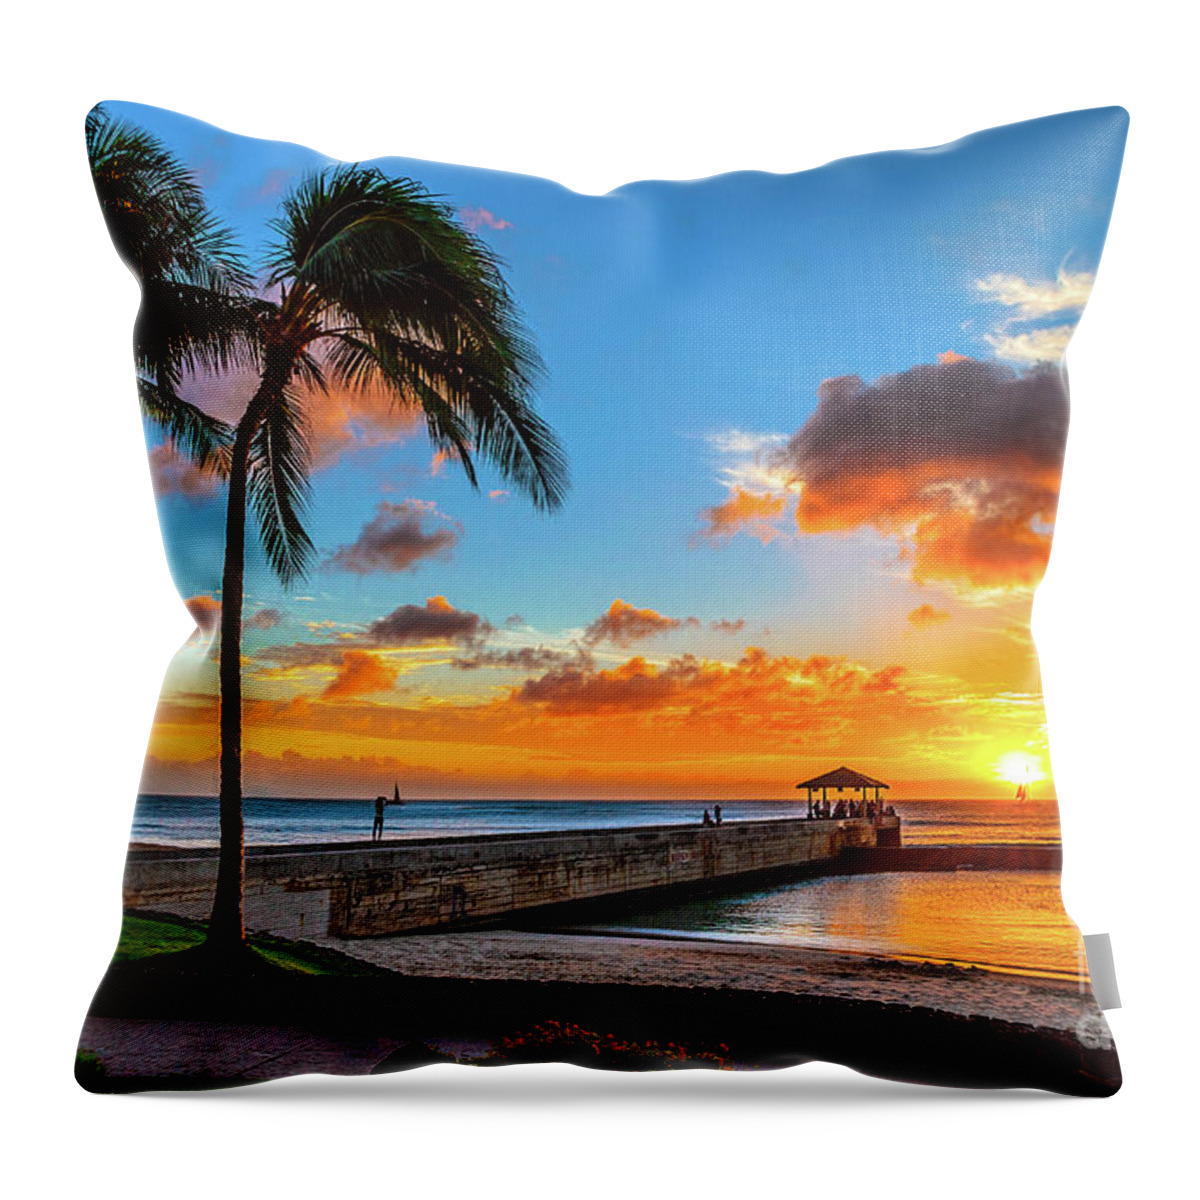 Waikiki Sunset Throw Pillow featuring the photograph Waikiki Sunset off of the Pier by Aloha Art